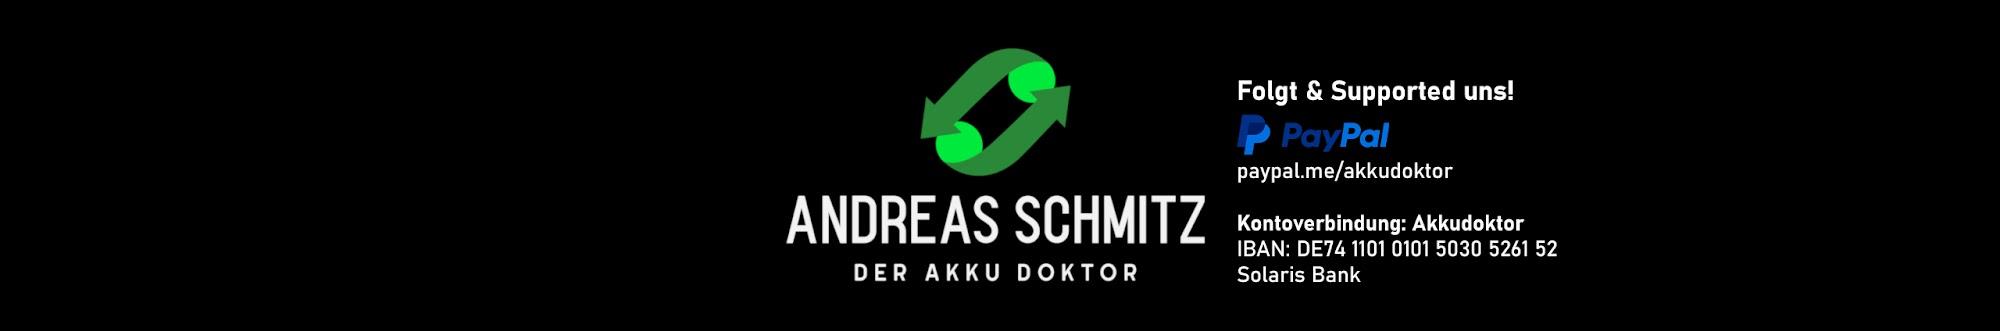 Andreas Schmitz